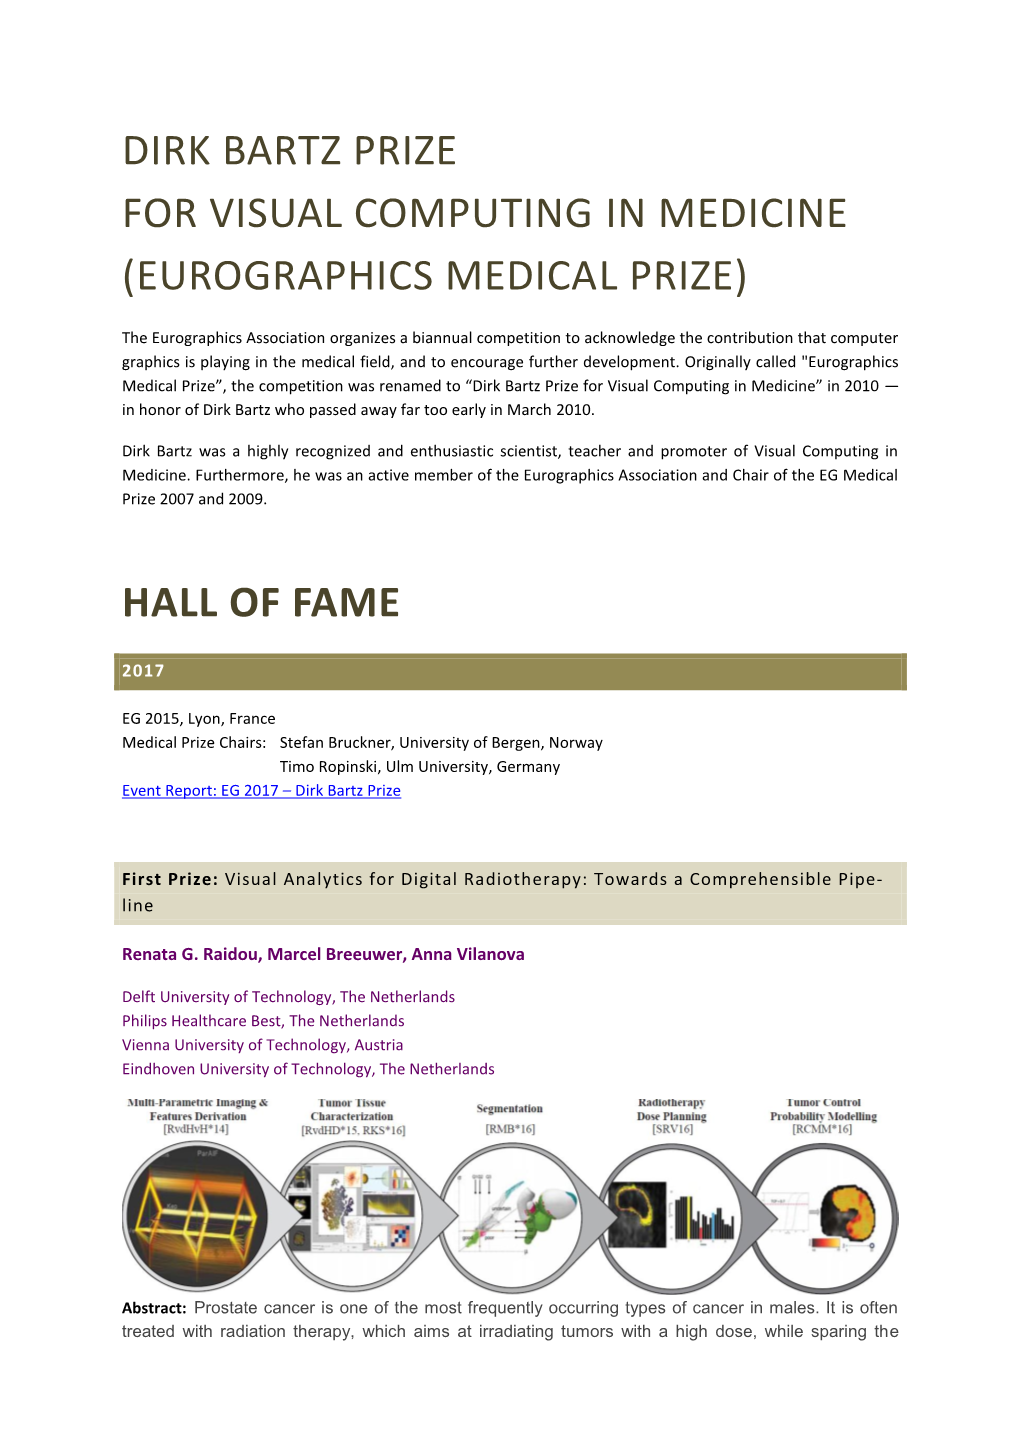 Dirk Bartz Prize for Visual Computing in Medicine (Eurographics Medical Prize)